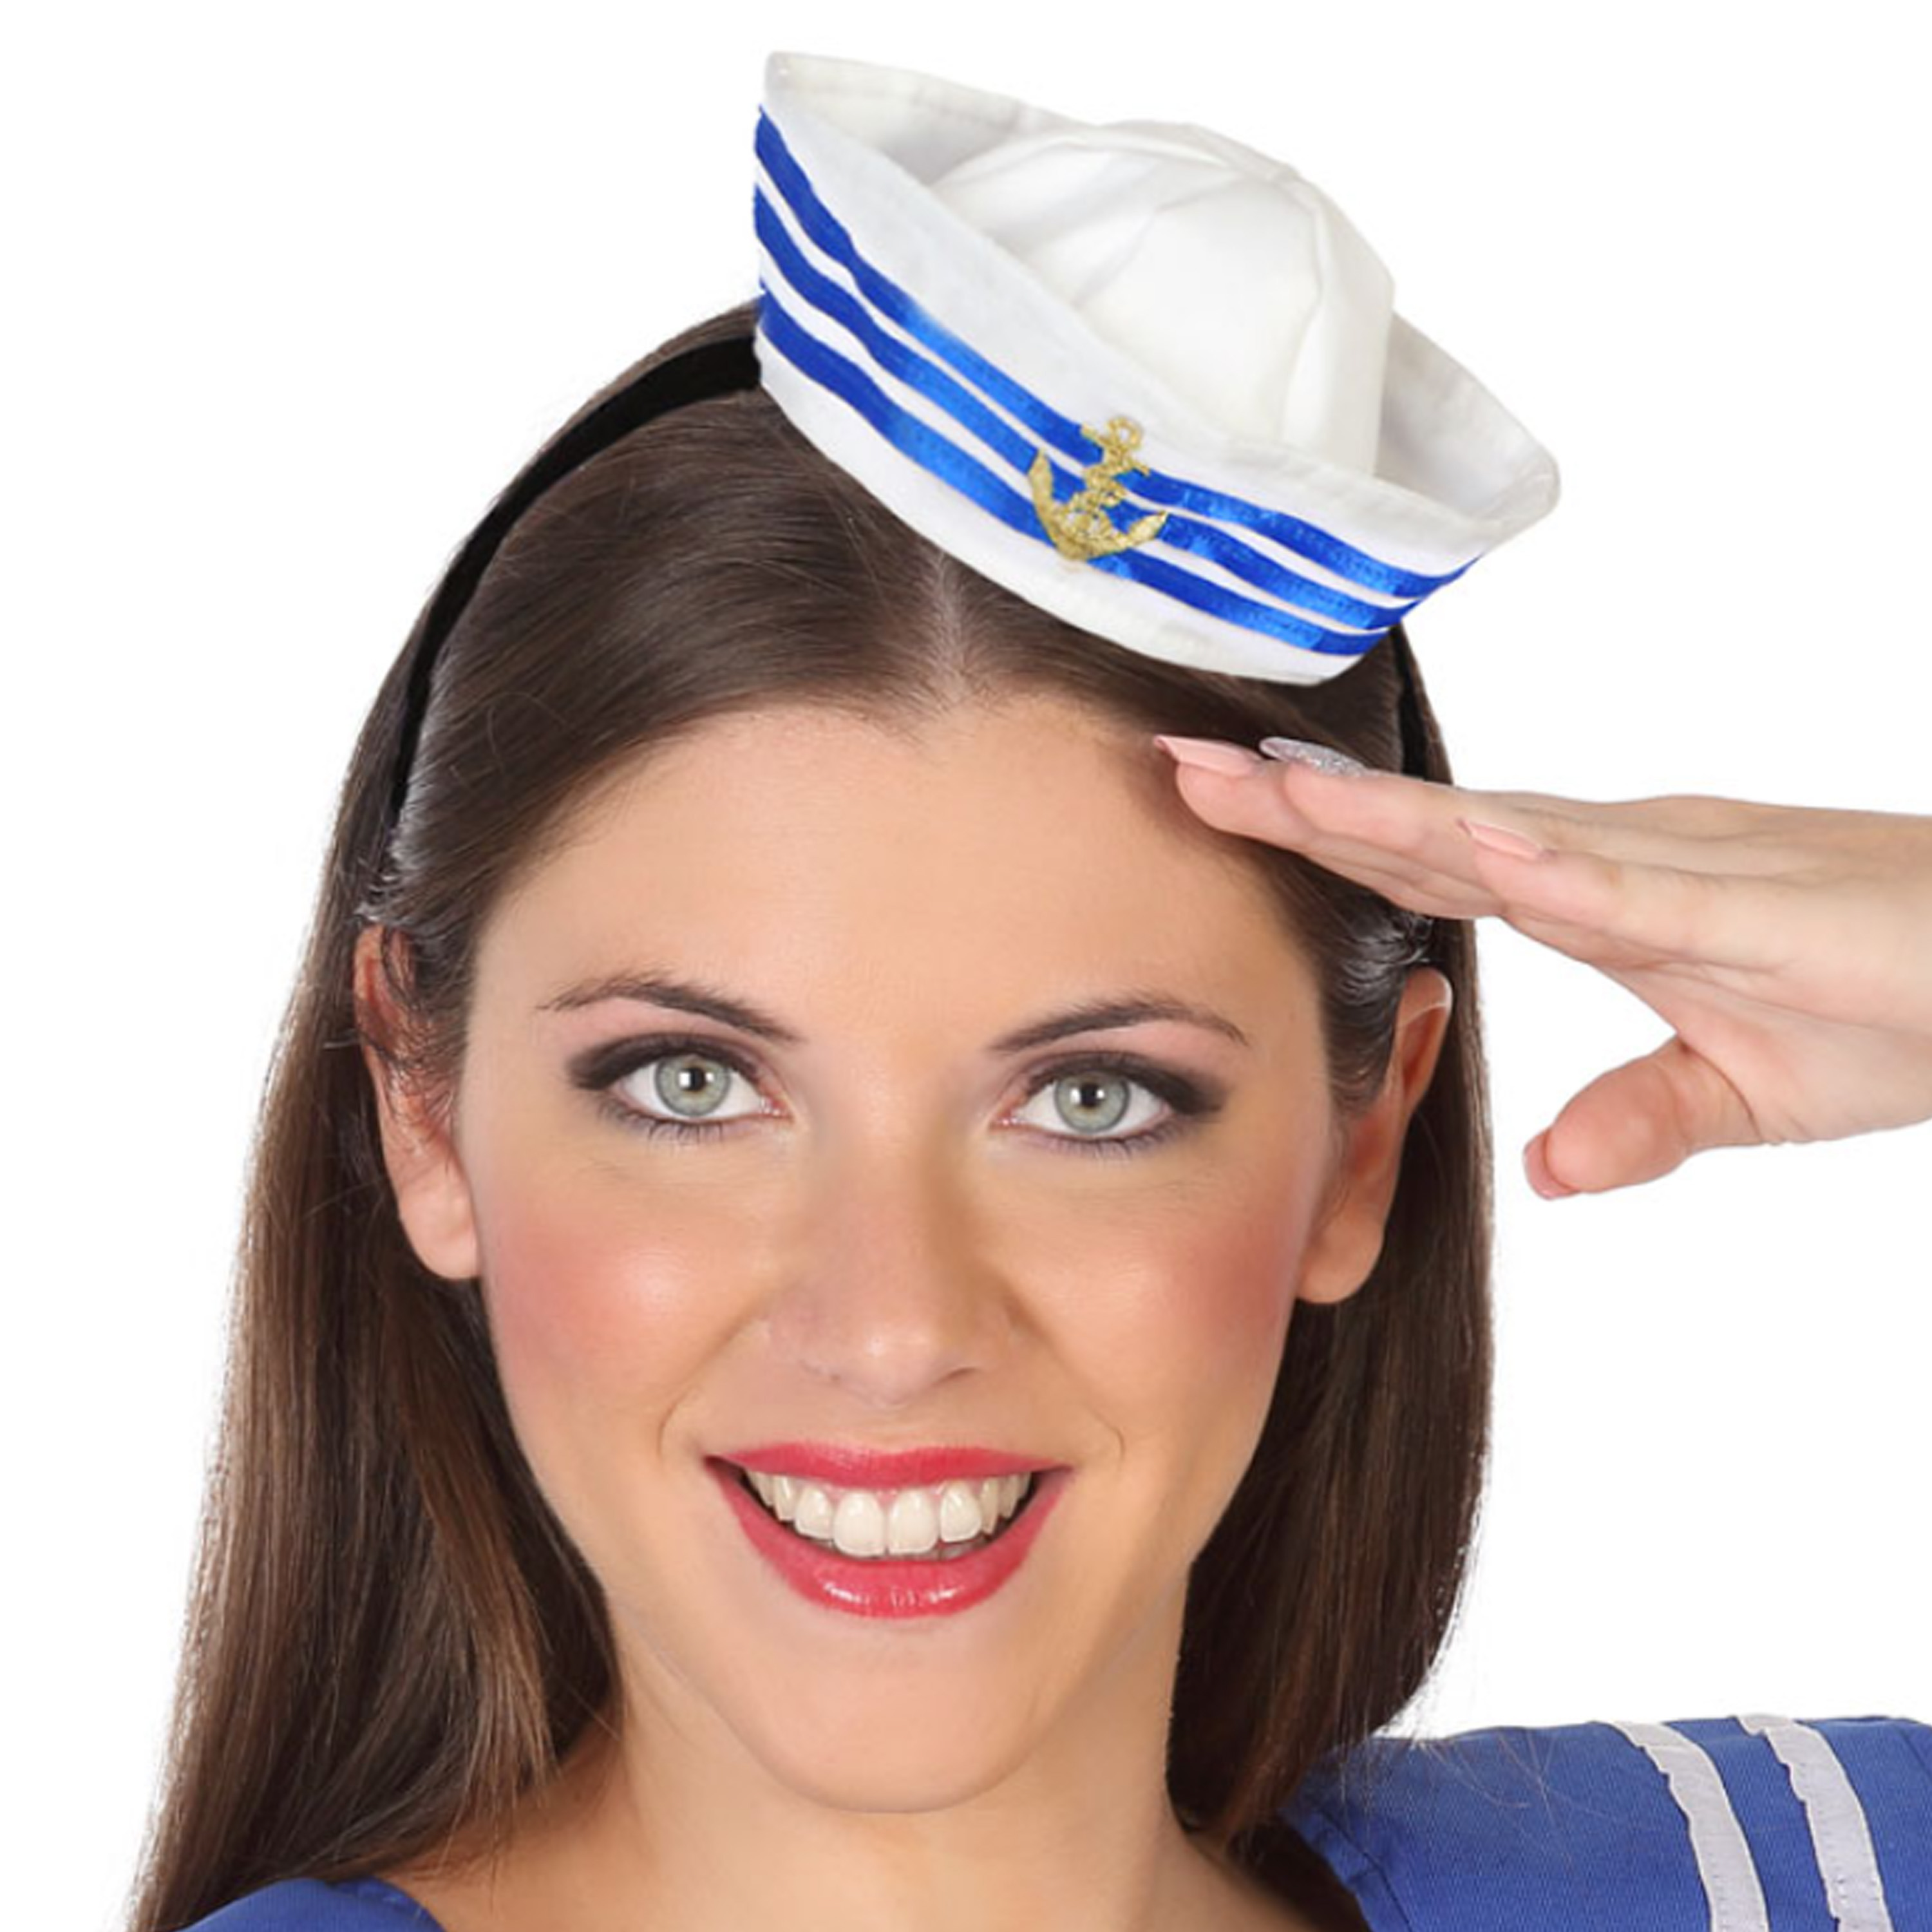 Verkleed diadeem mini hoedje - blauw/wit - meisjes/dames - Matroos/sailor thema